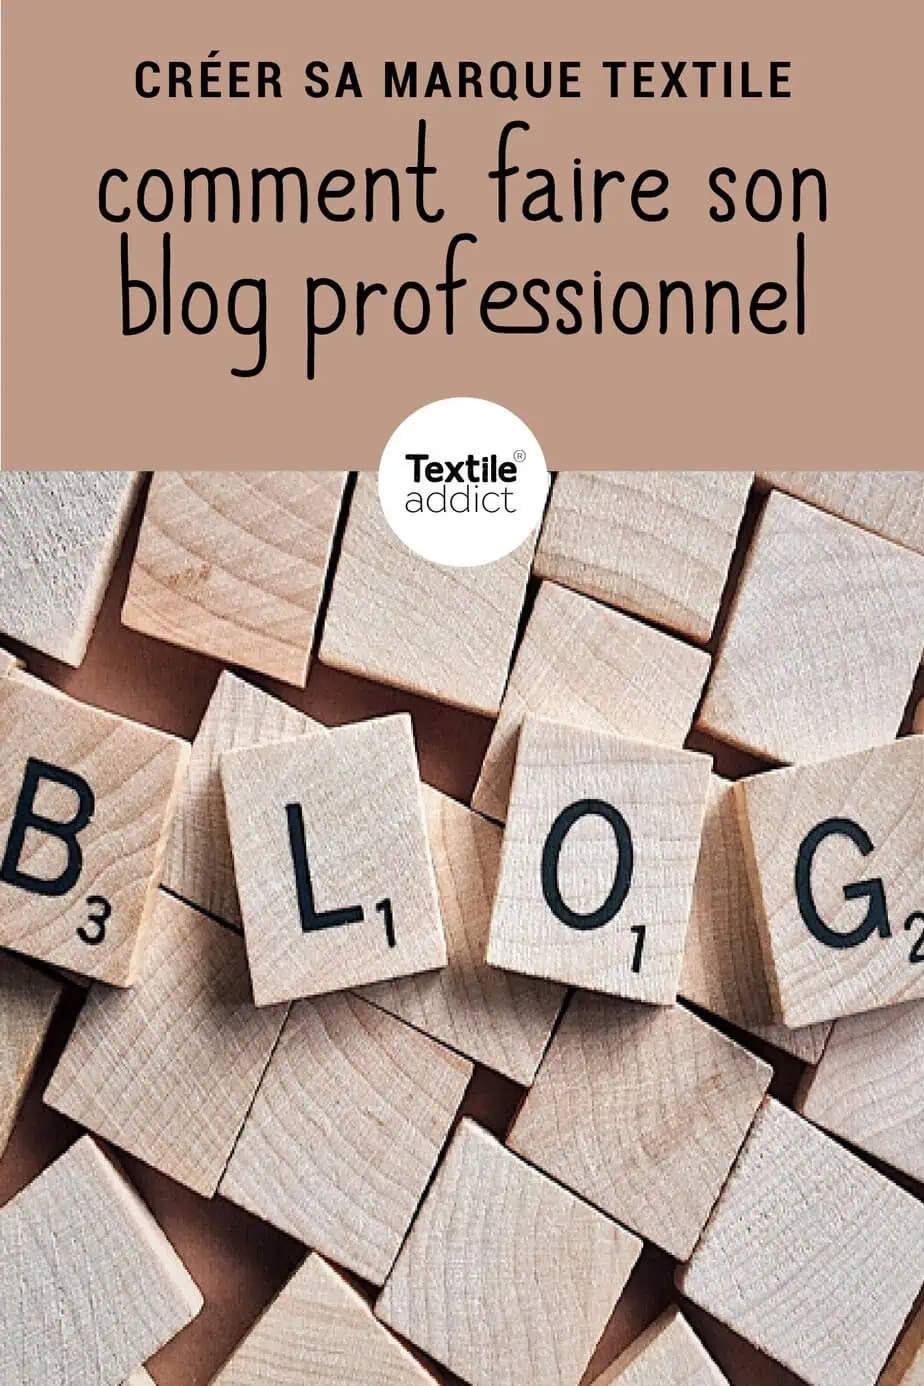 blog professionnel